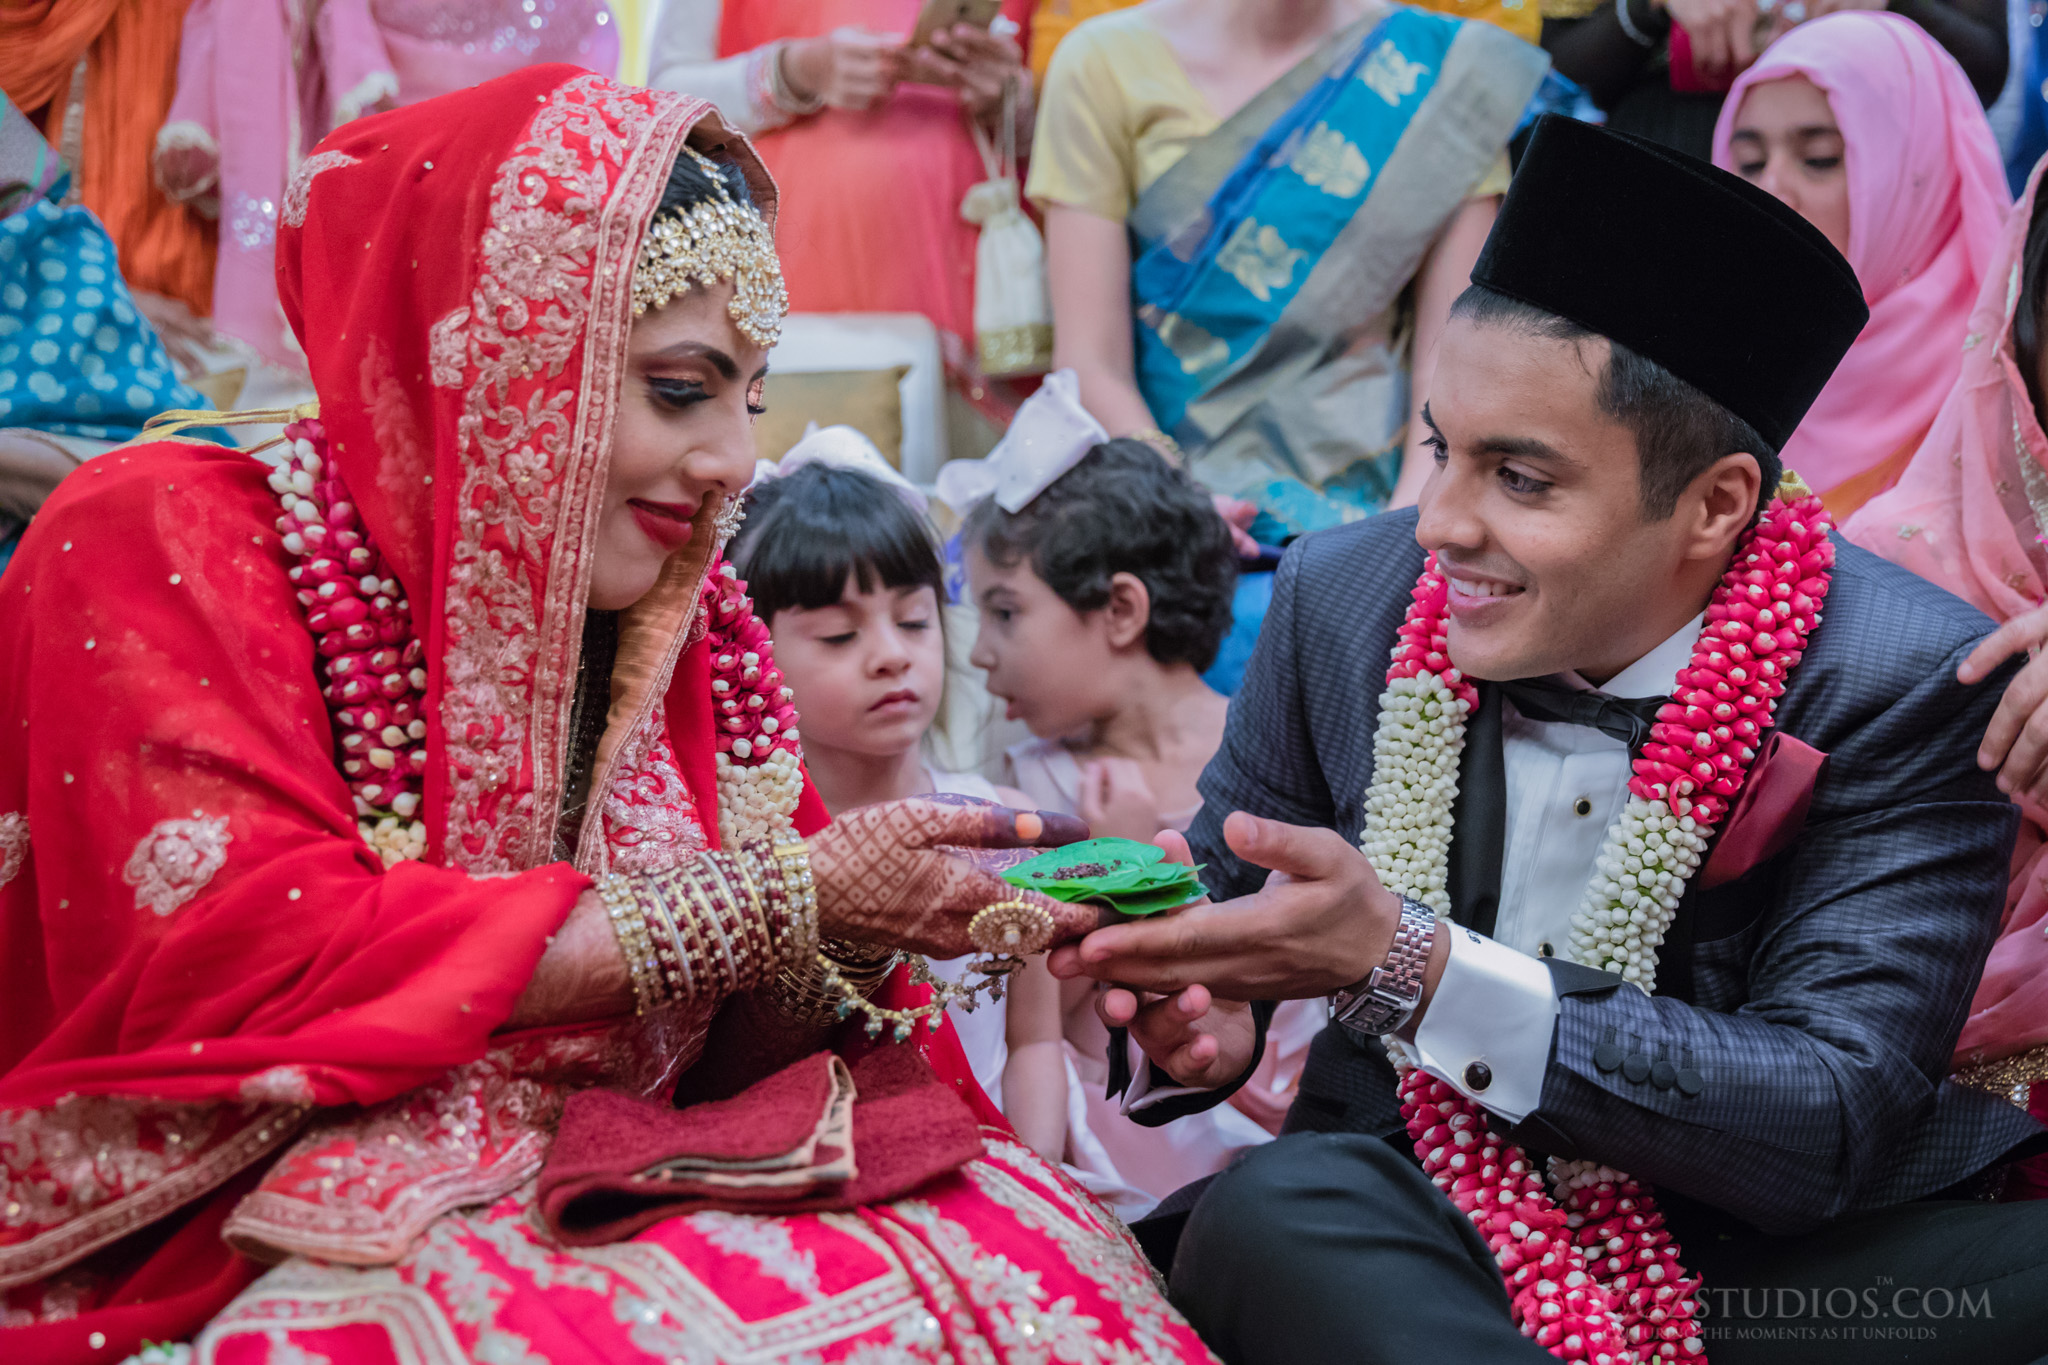 Muslim wedding rituals couple exchanging ring or gifts 3